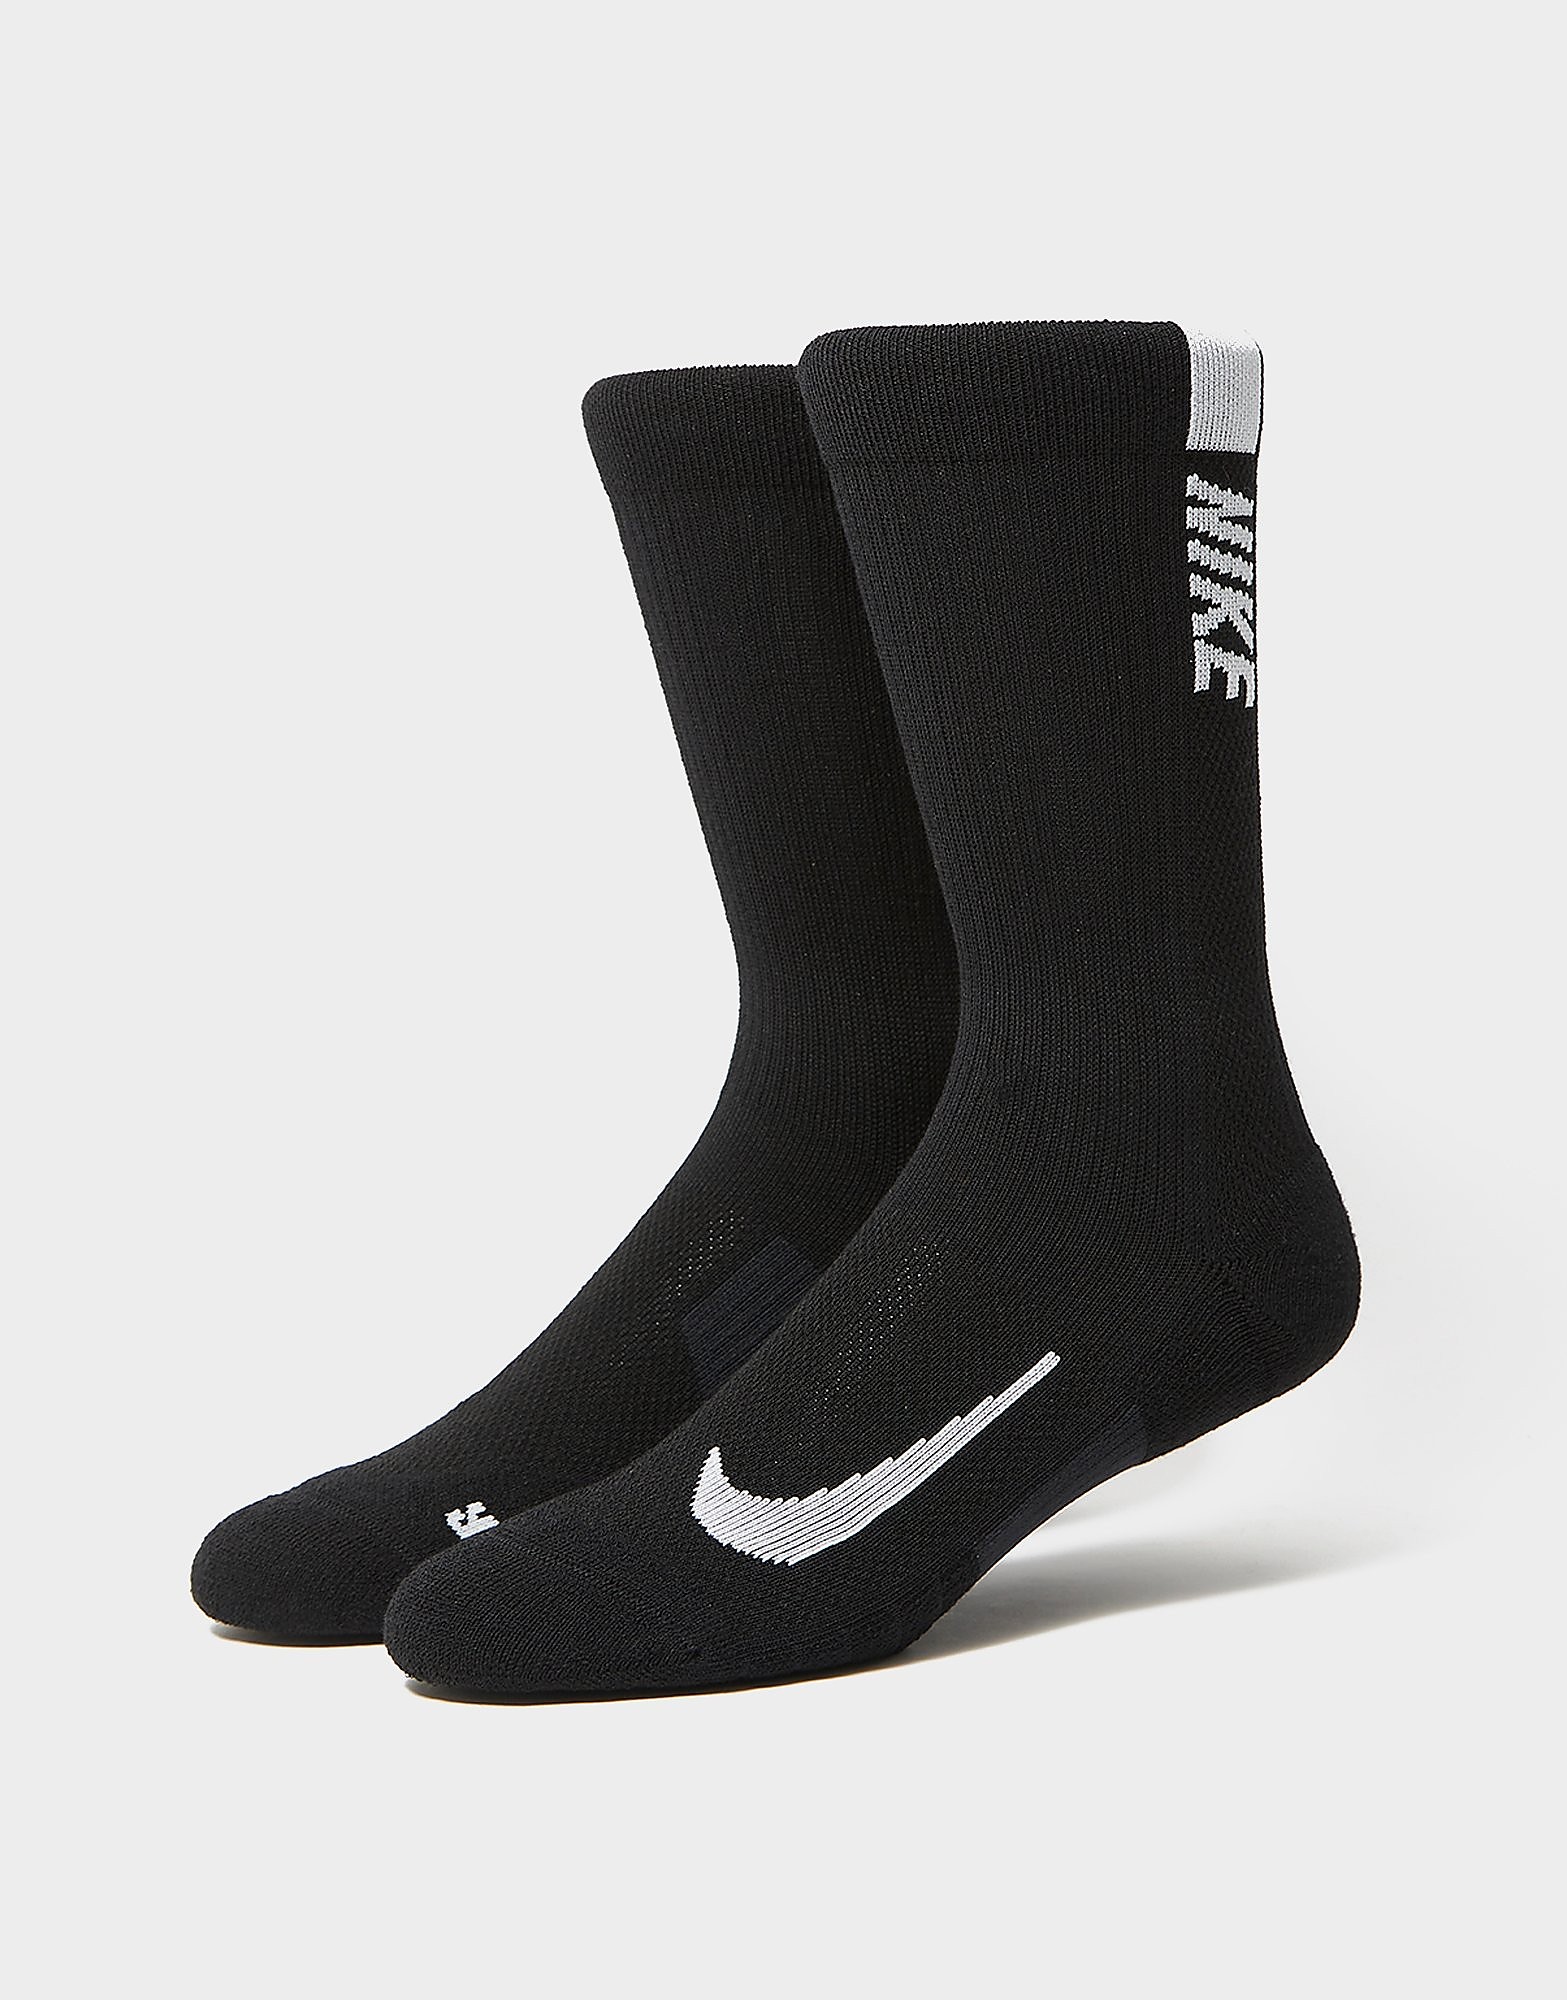 Nike multiplier-juoksusukat 2 kpl - mens, musta, nike